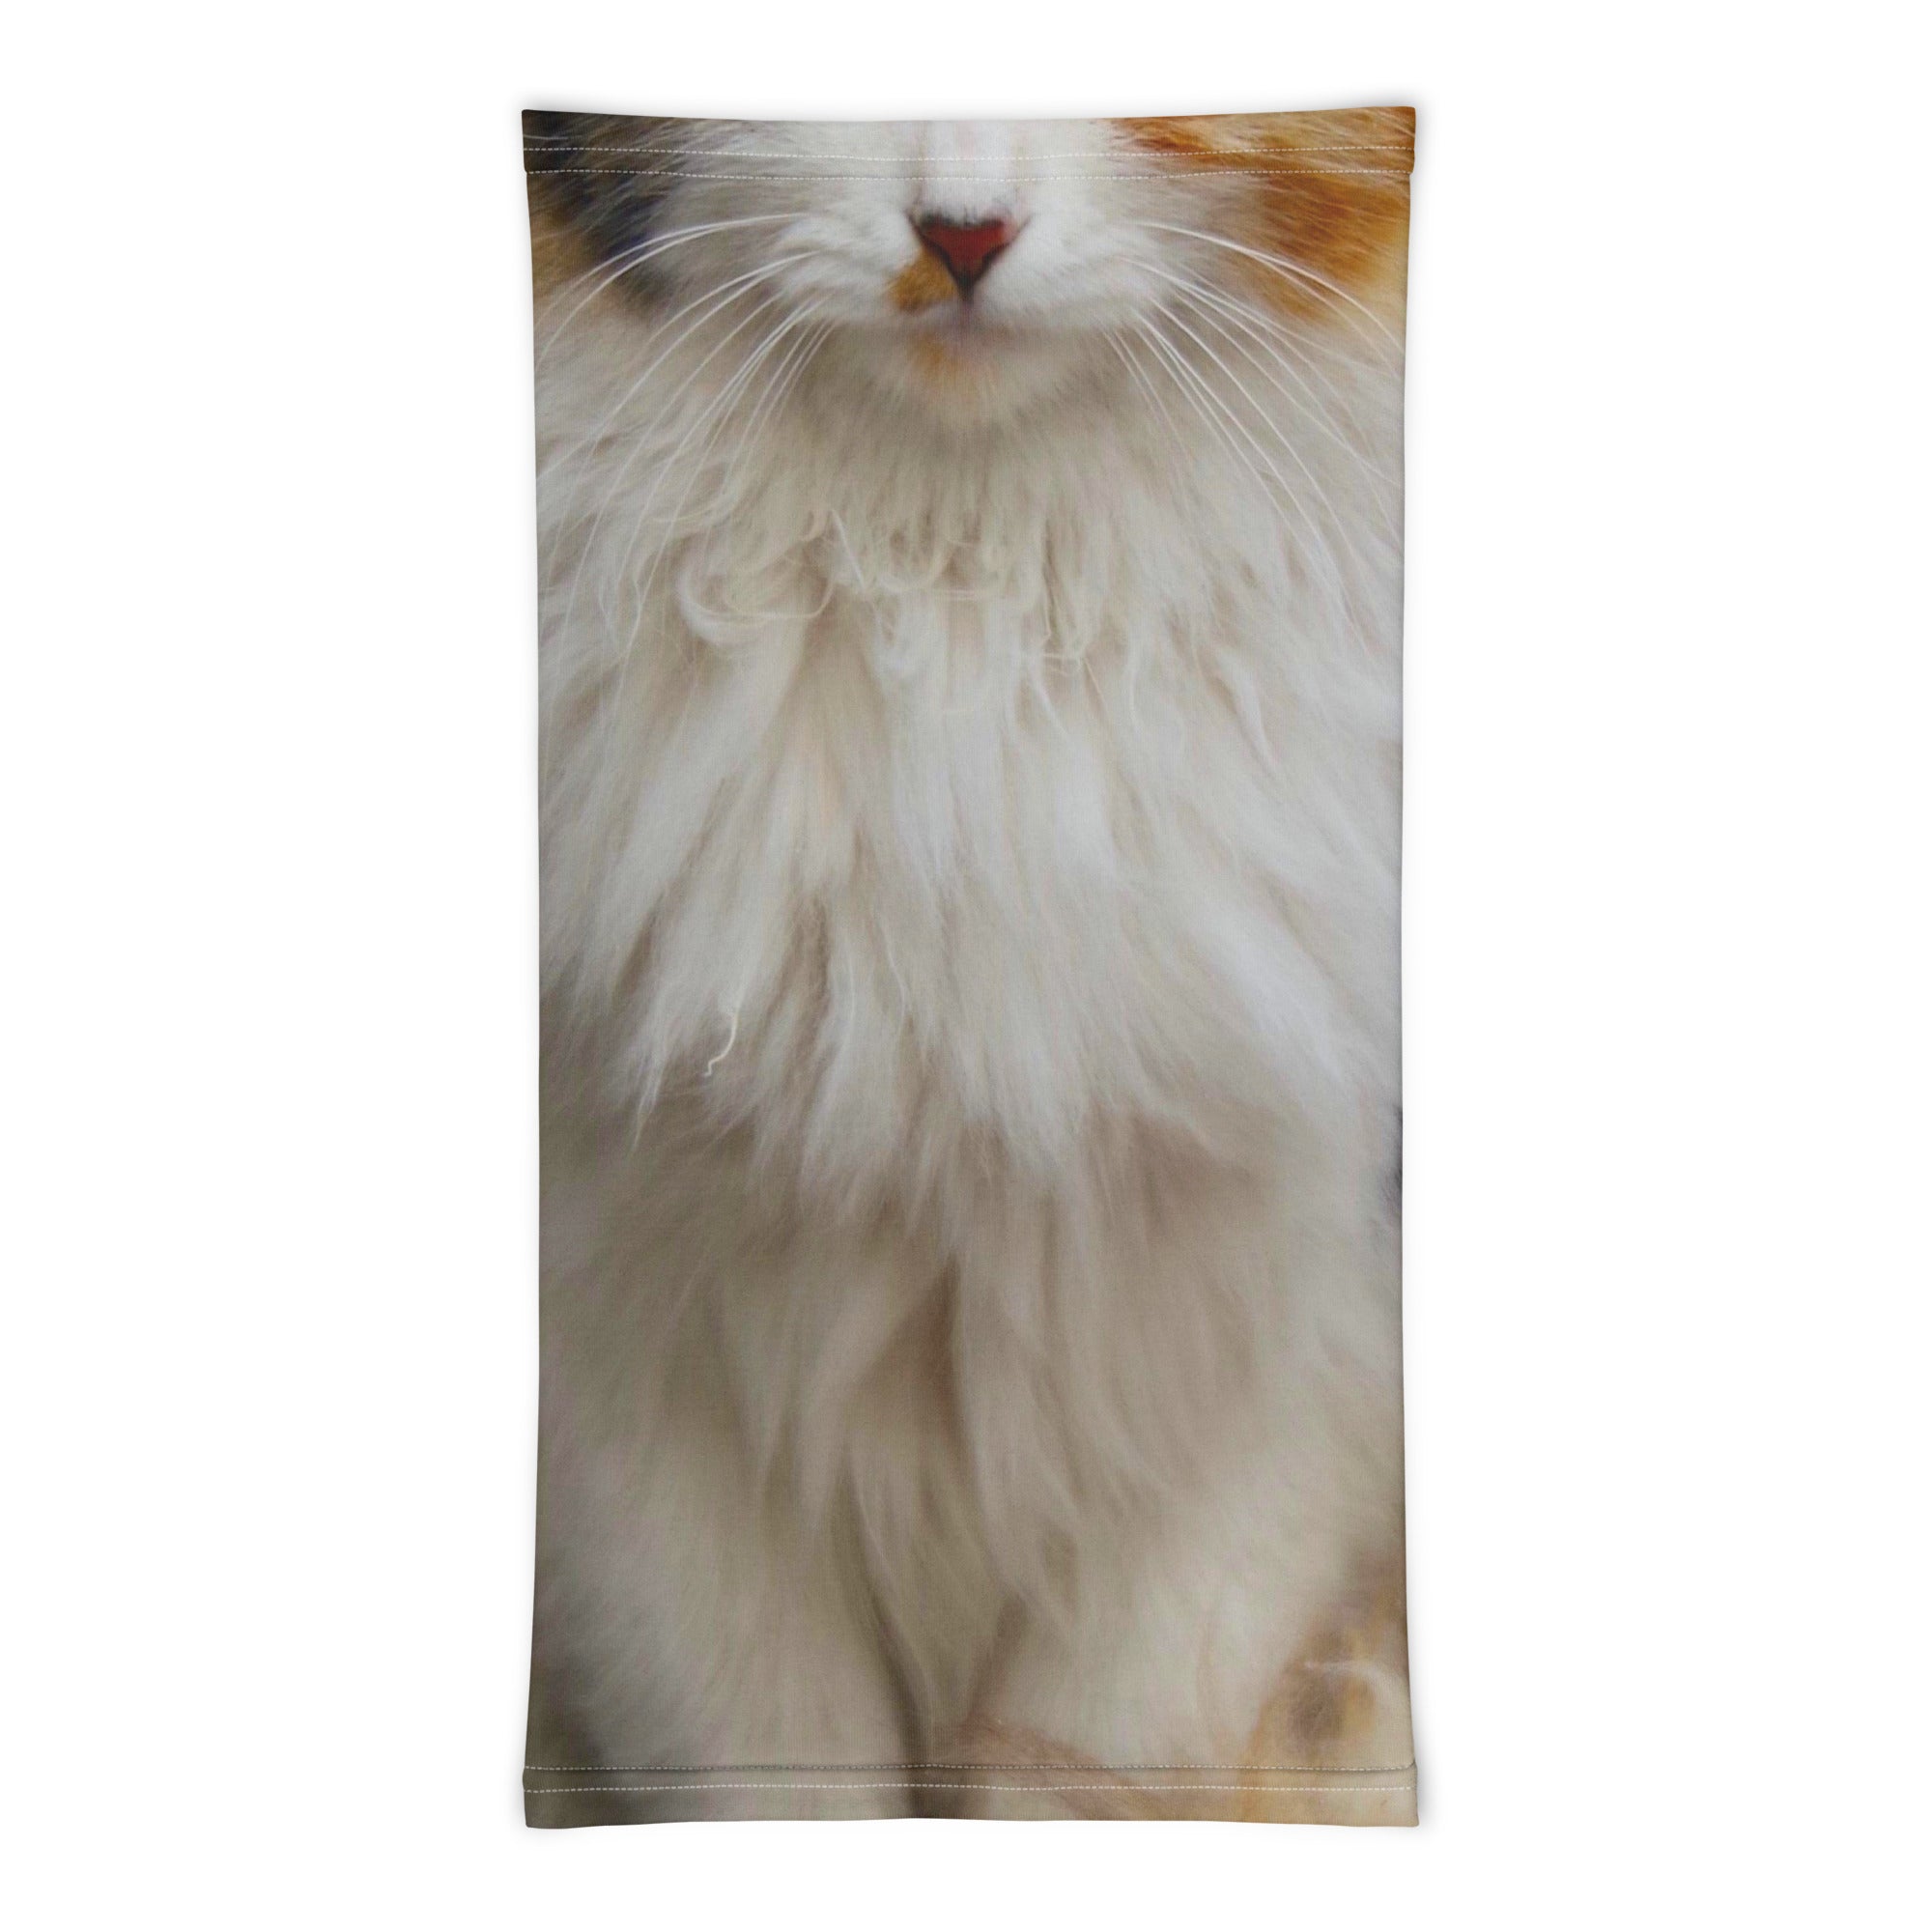 Real Cat Face Print Neck Gaiter